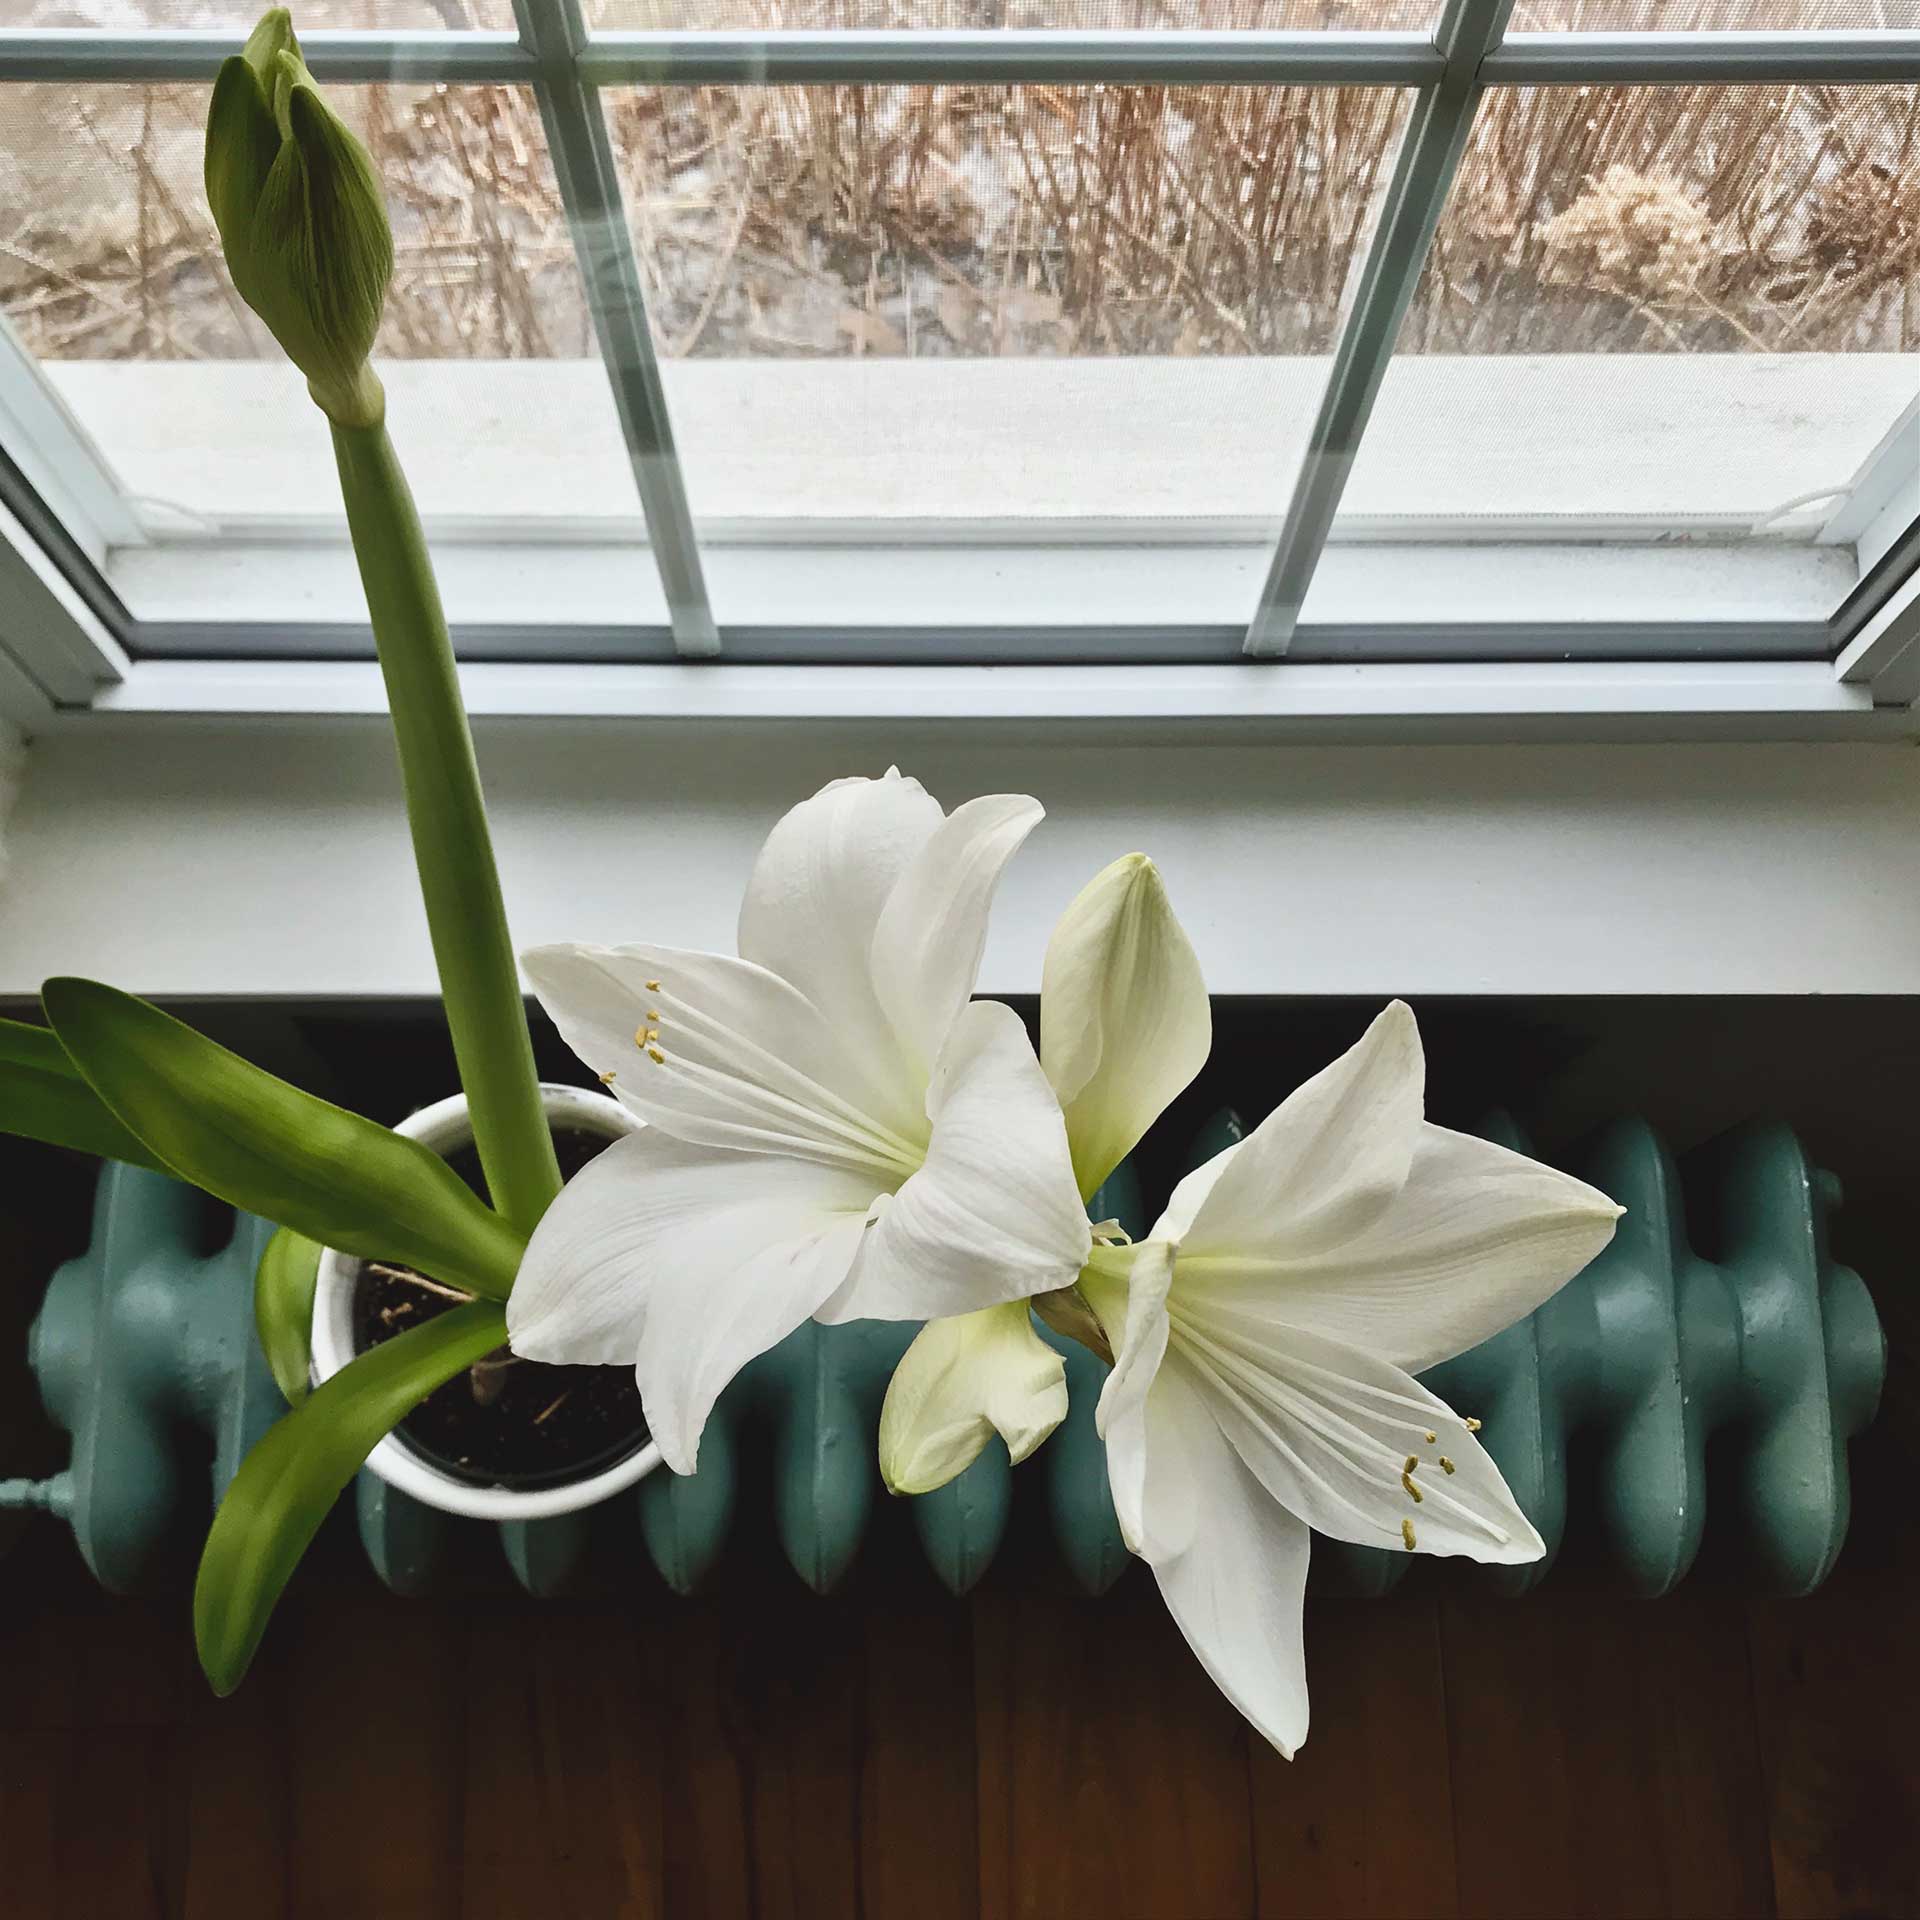 Amaryllis in Bloom by Shine Photo Design